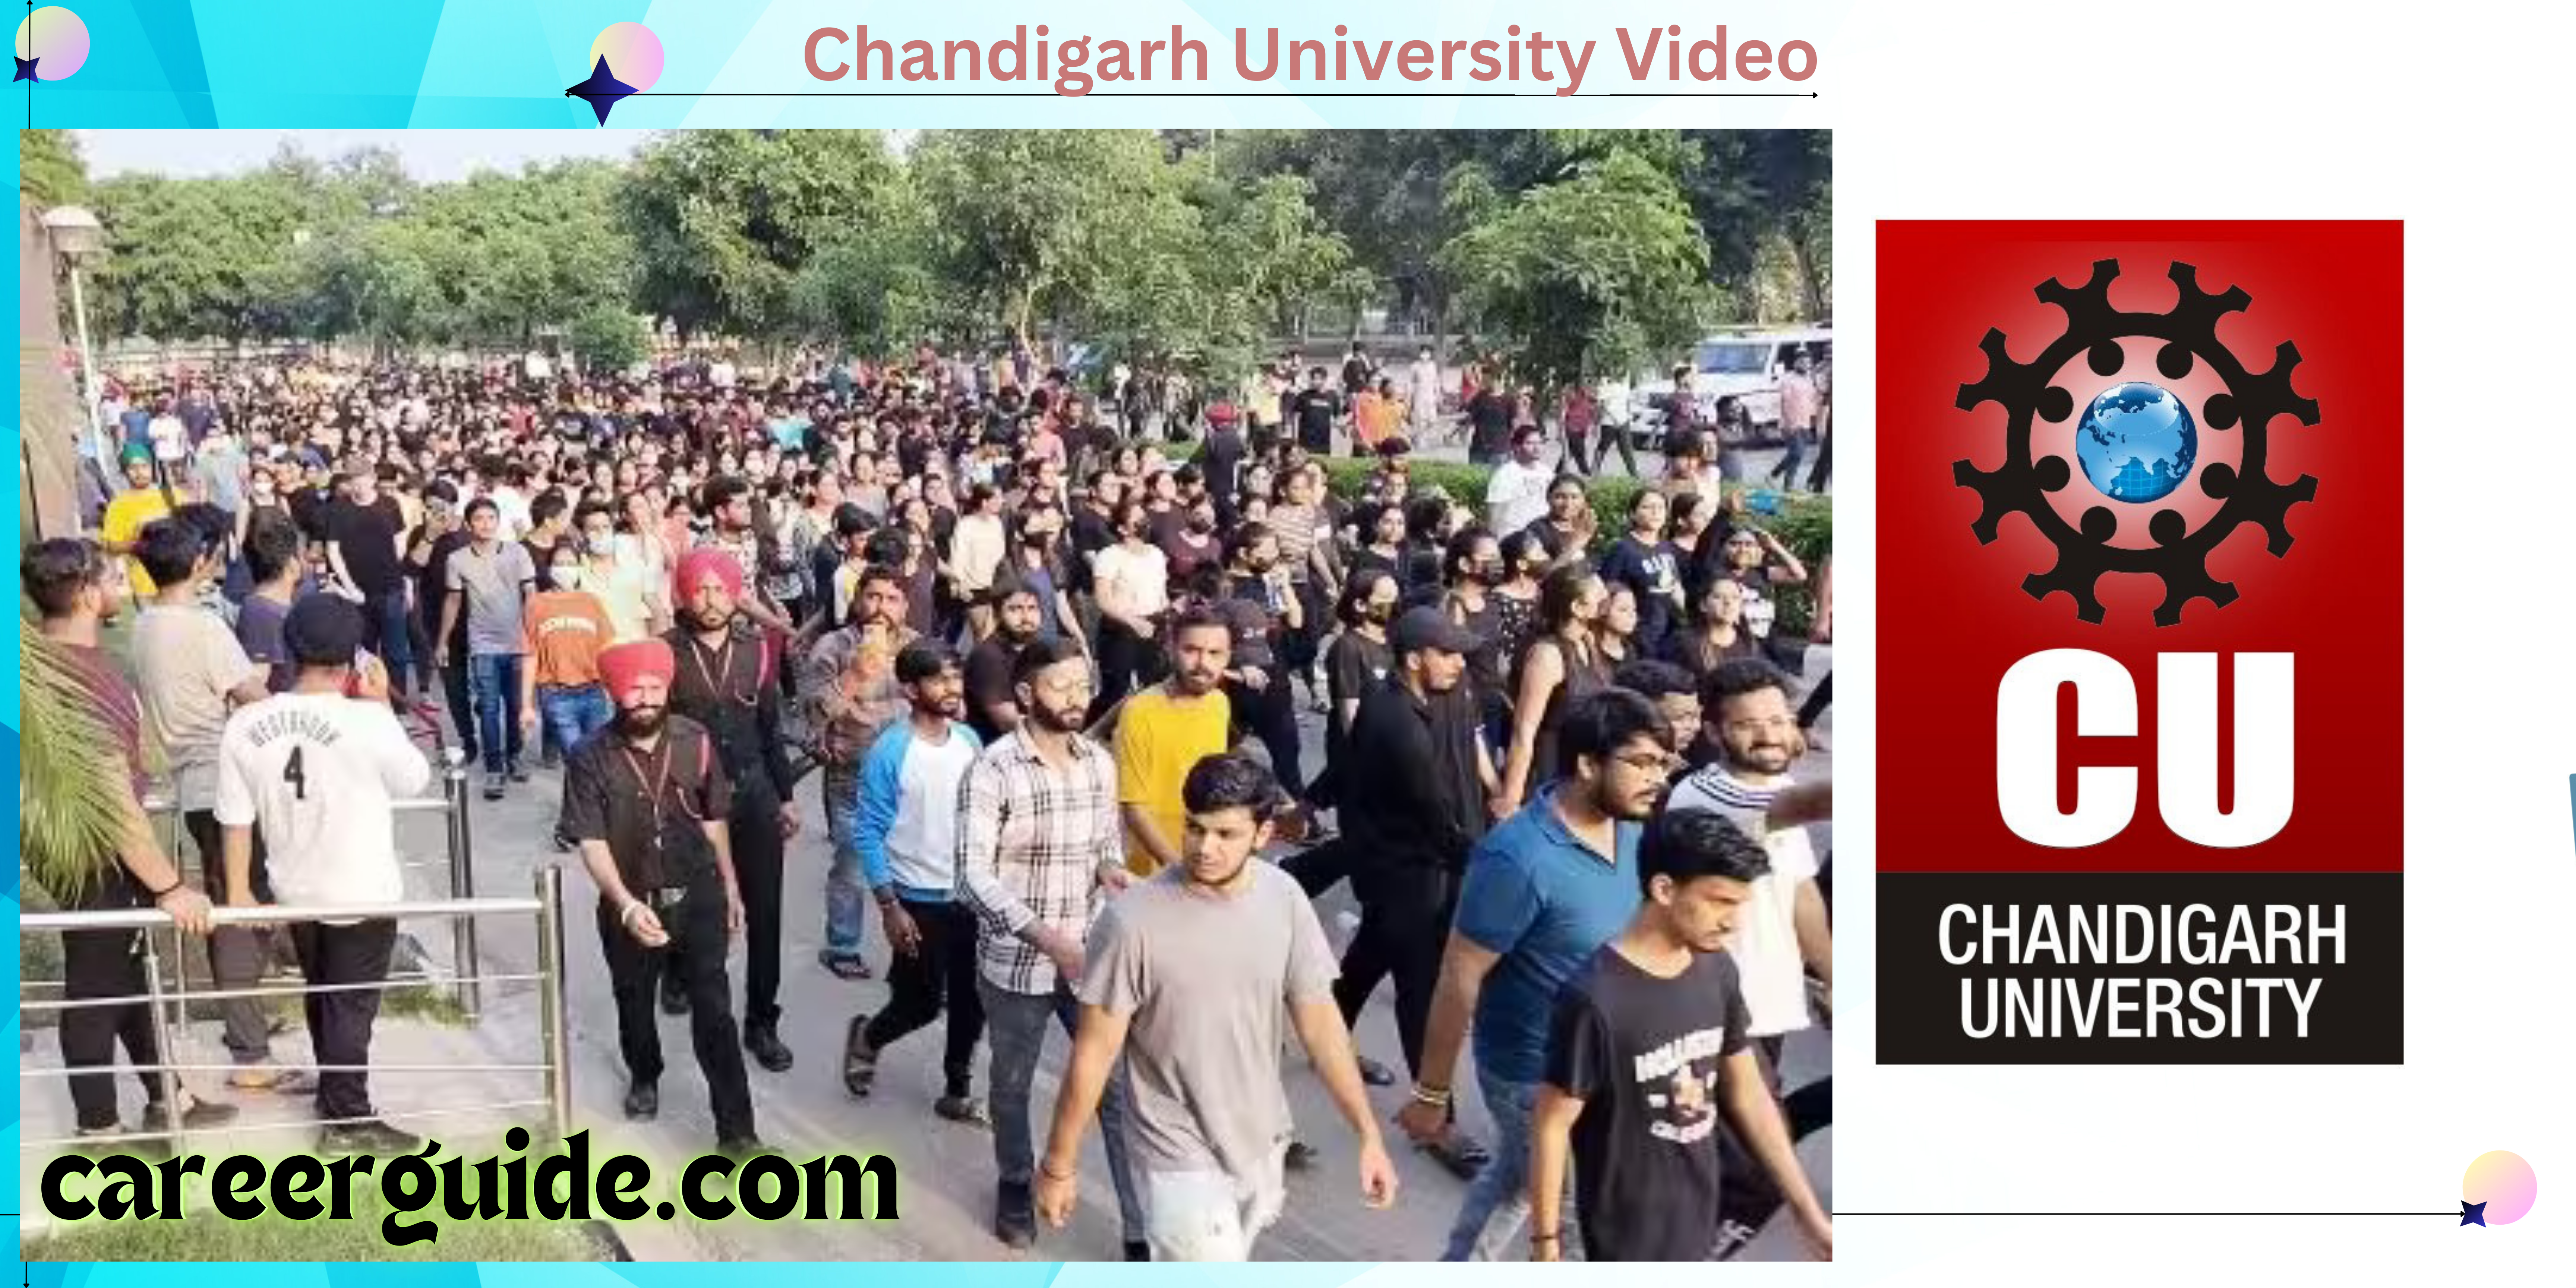 Chandigarh University founder-chancellor Satnam Singh Sandhu nominated to  Rajya Sabha - The Week